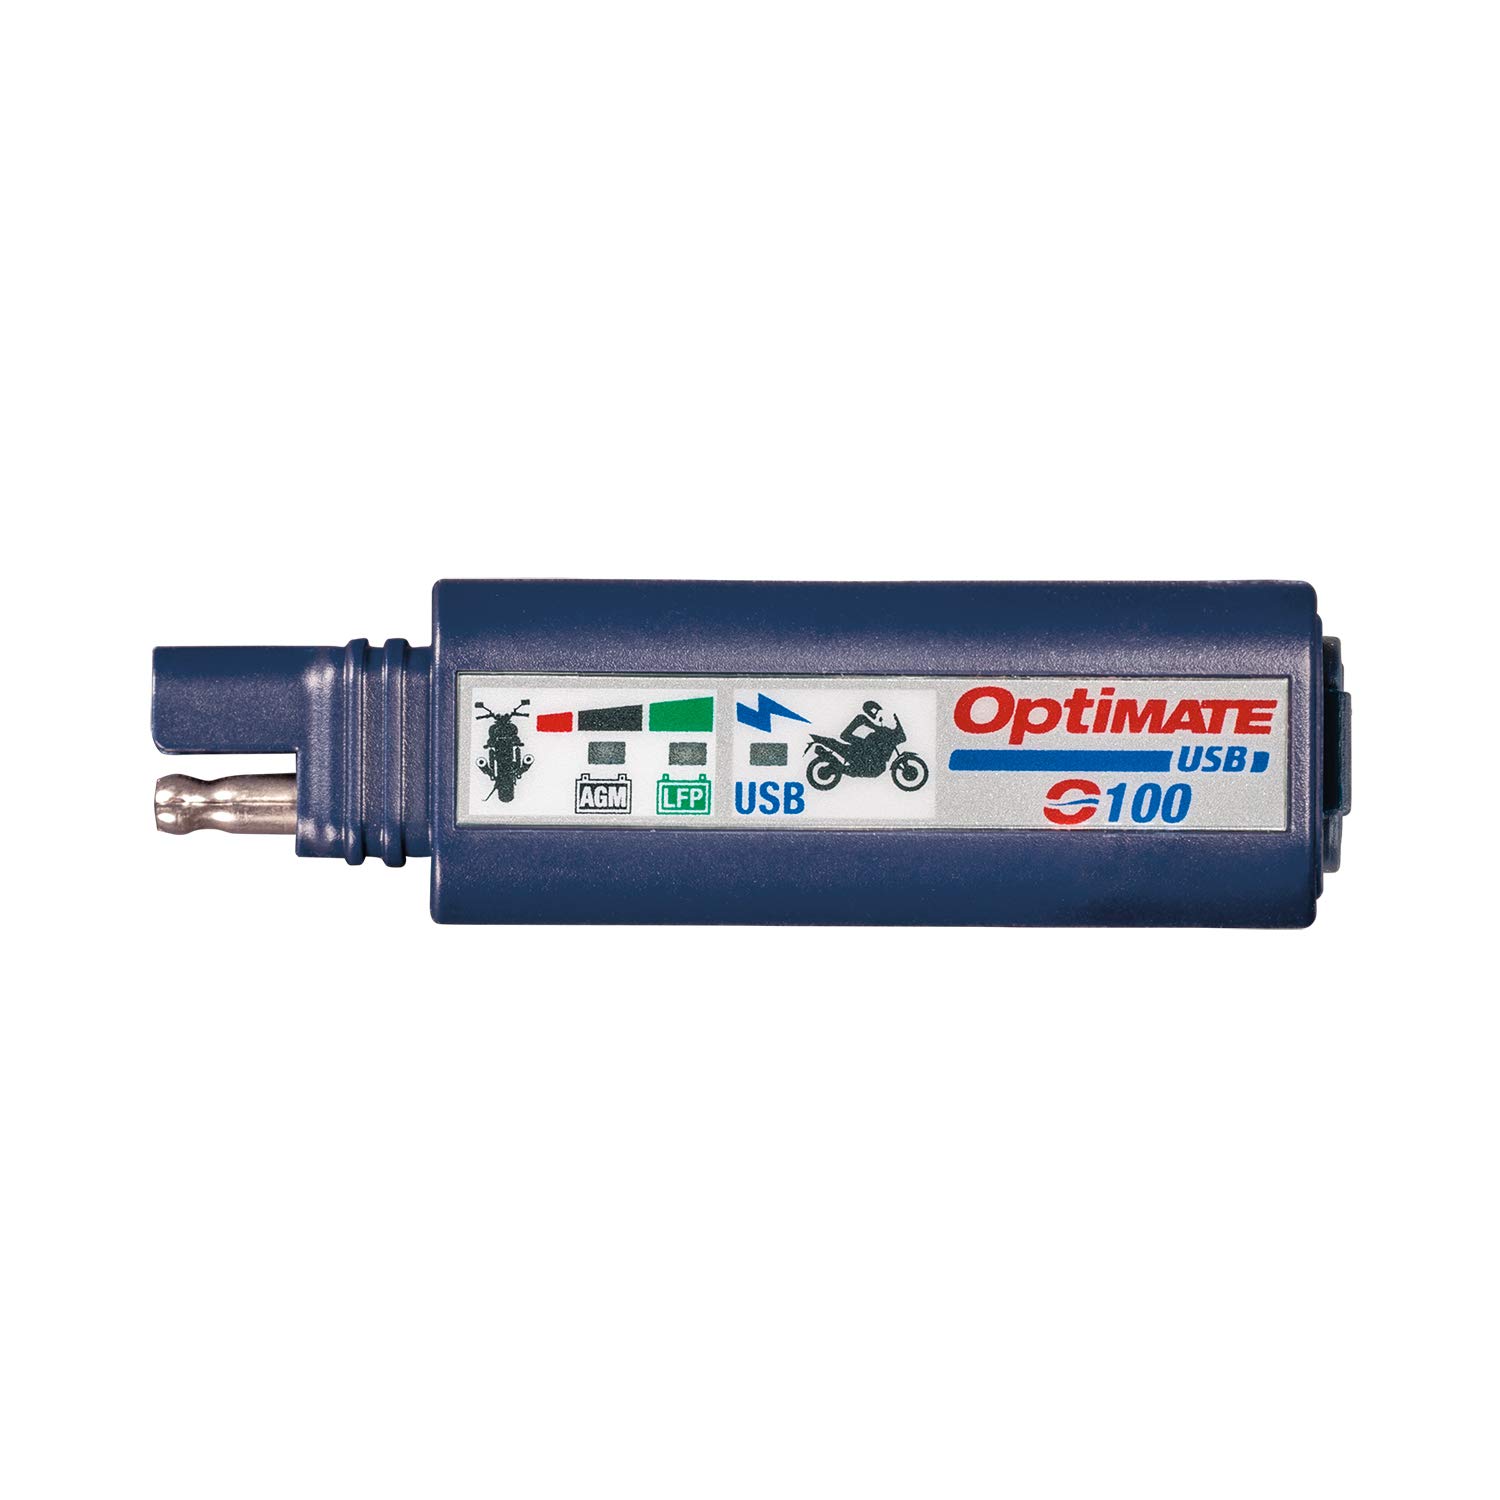 TecMate OptiMATE USB O-100, Kombination 2400mA USB Ladegerät und 3-LED-Batteriemonitor, mit Fahrzeugbatterieschutz. von Tecmate